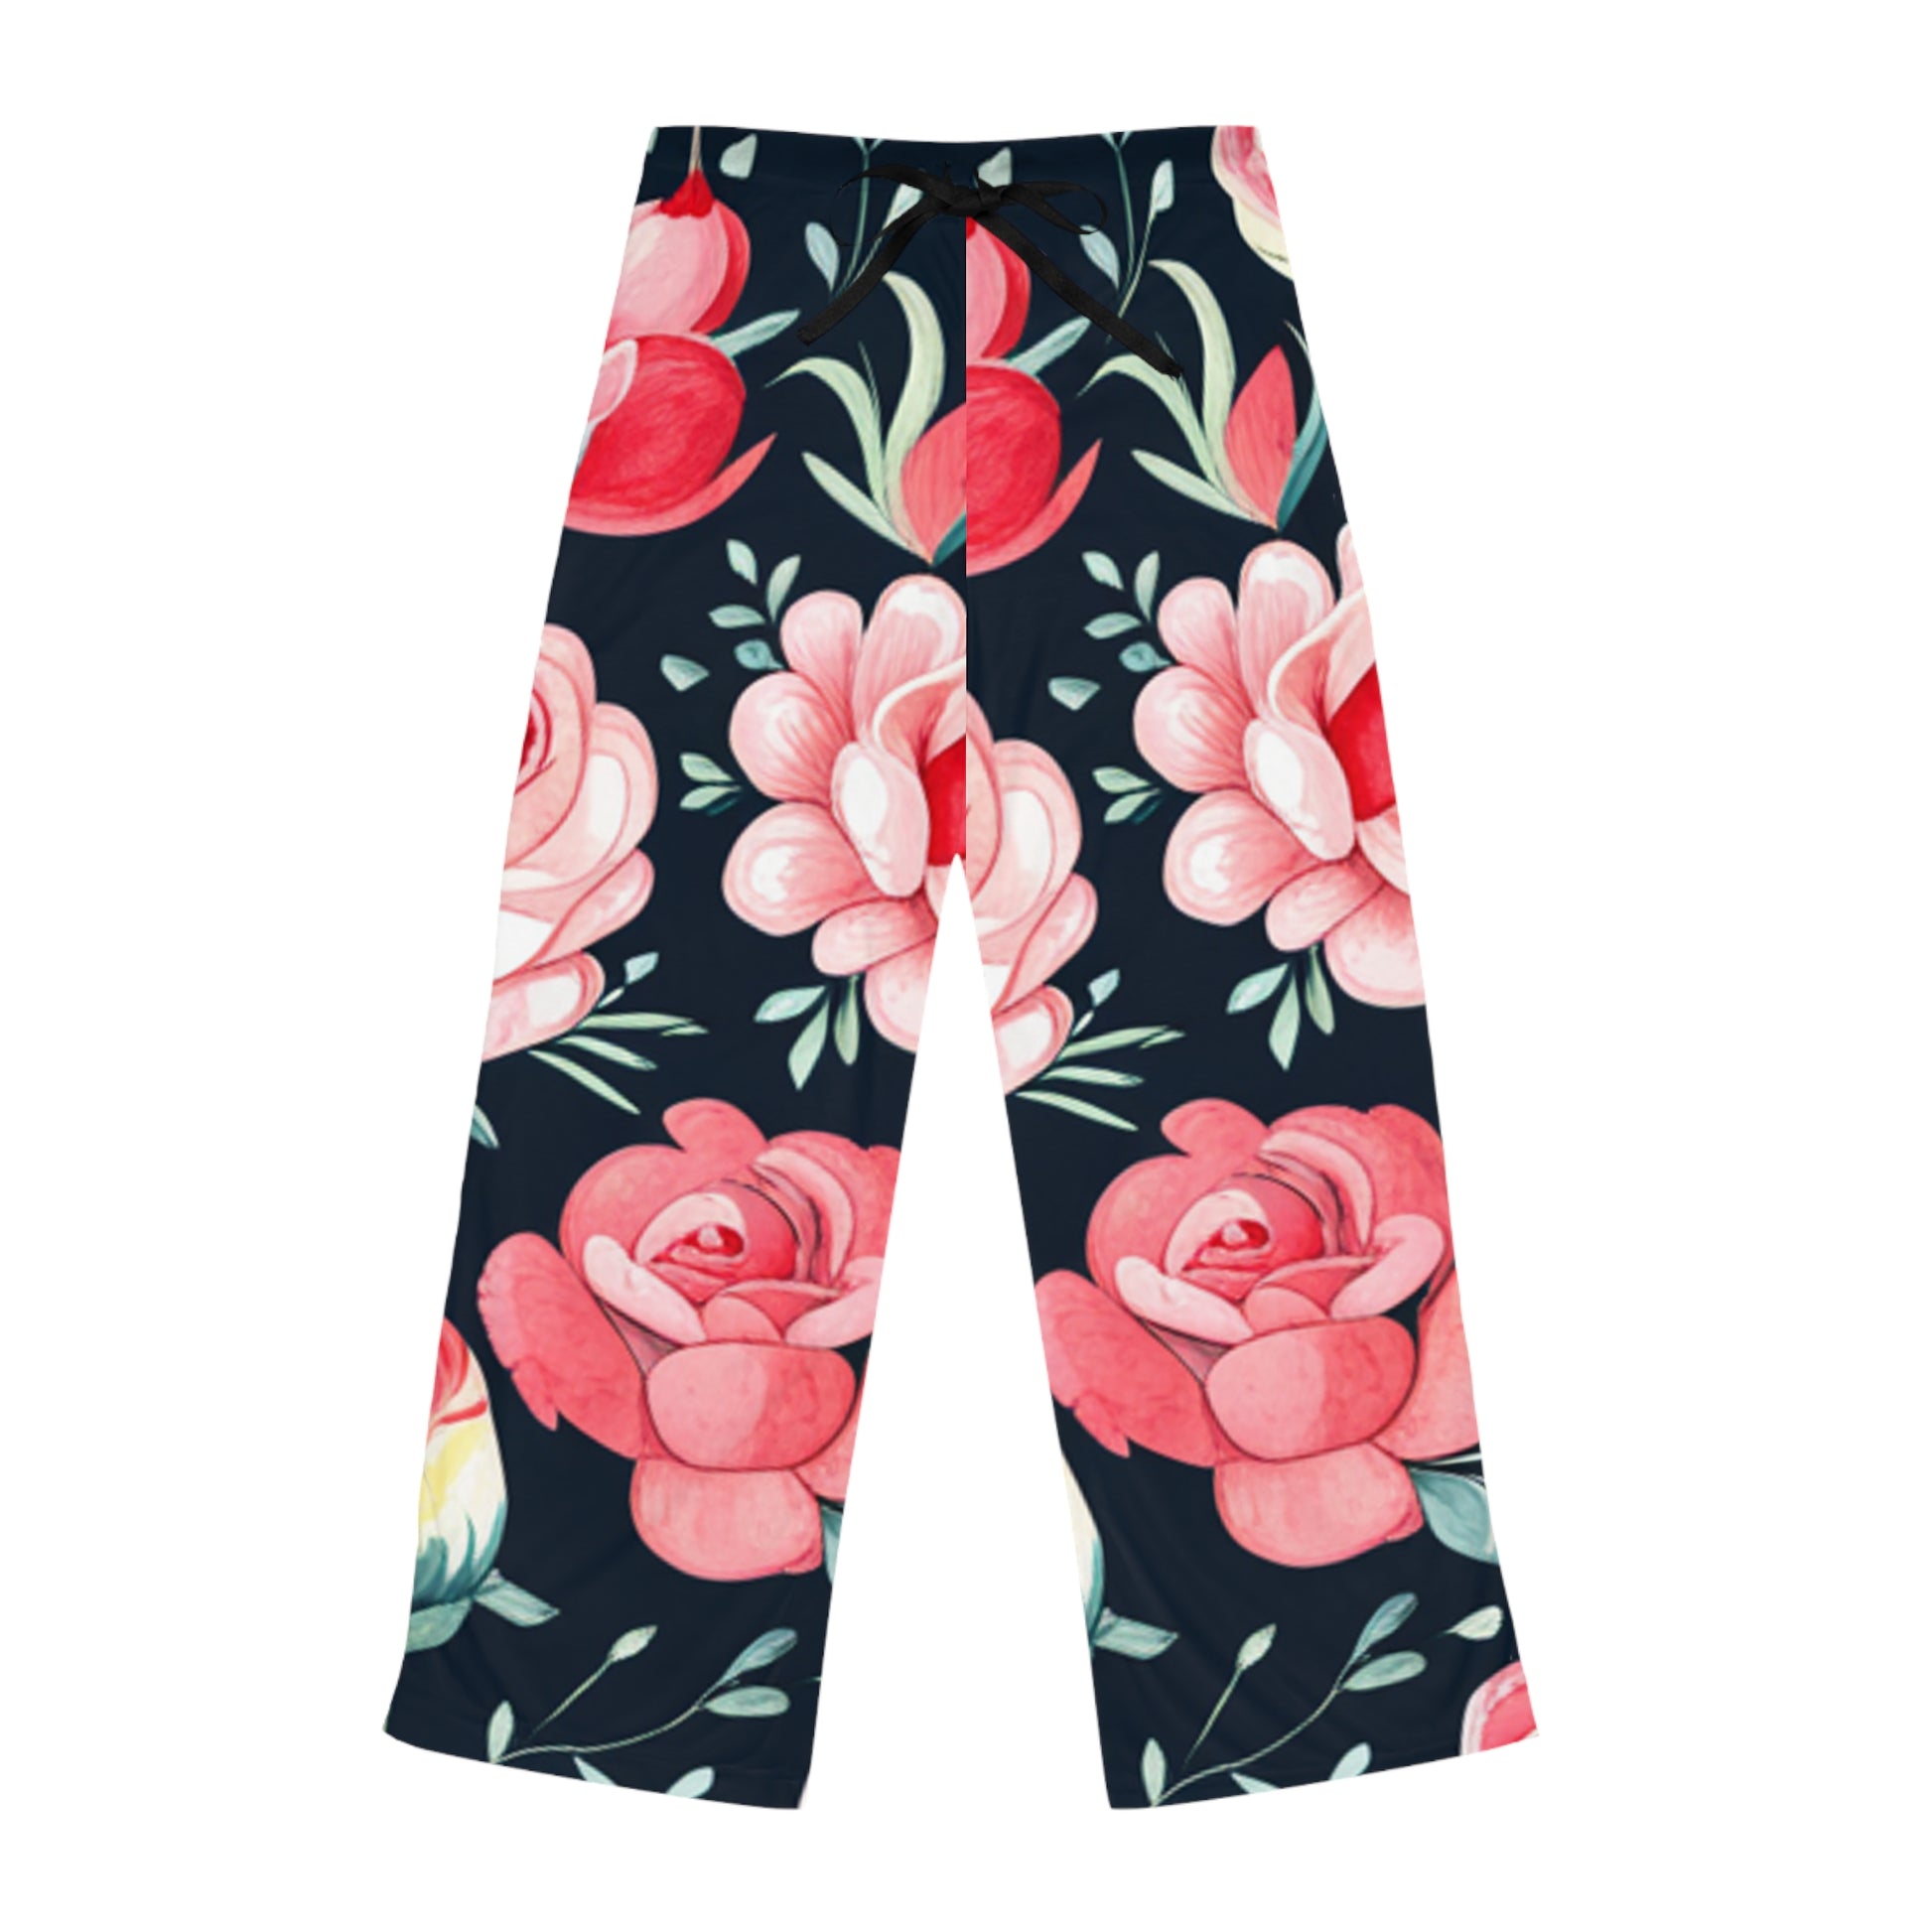 Oarencol Cute Mushroom Florals Women's Pajama Pants Pink Flowers Leaf Buds  Sleepwear XS-XL, Multi, Large : : Clothing, Shoes & Accessories